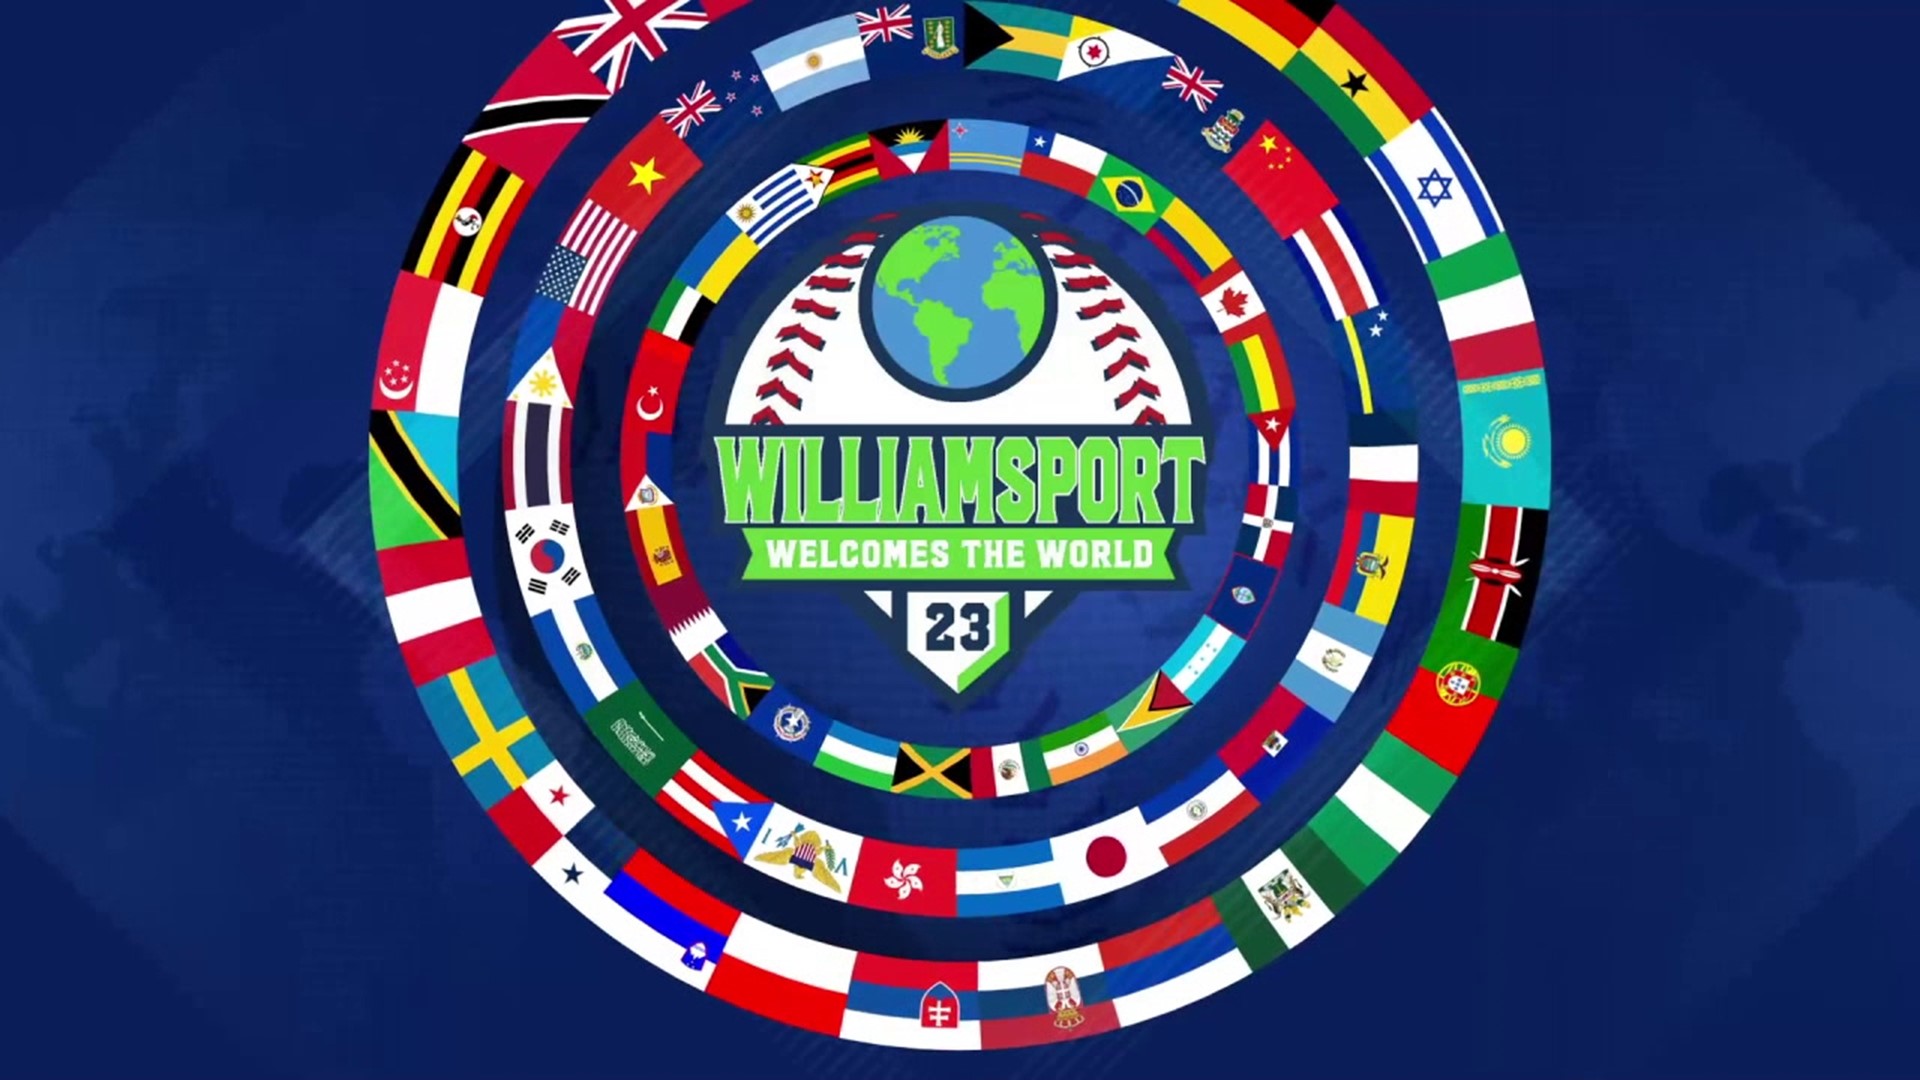 Williamsport the World